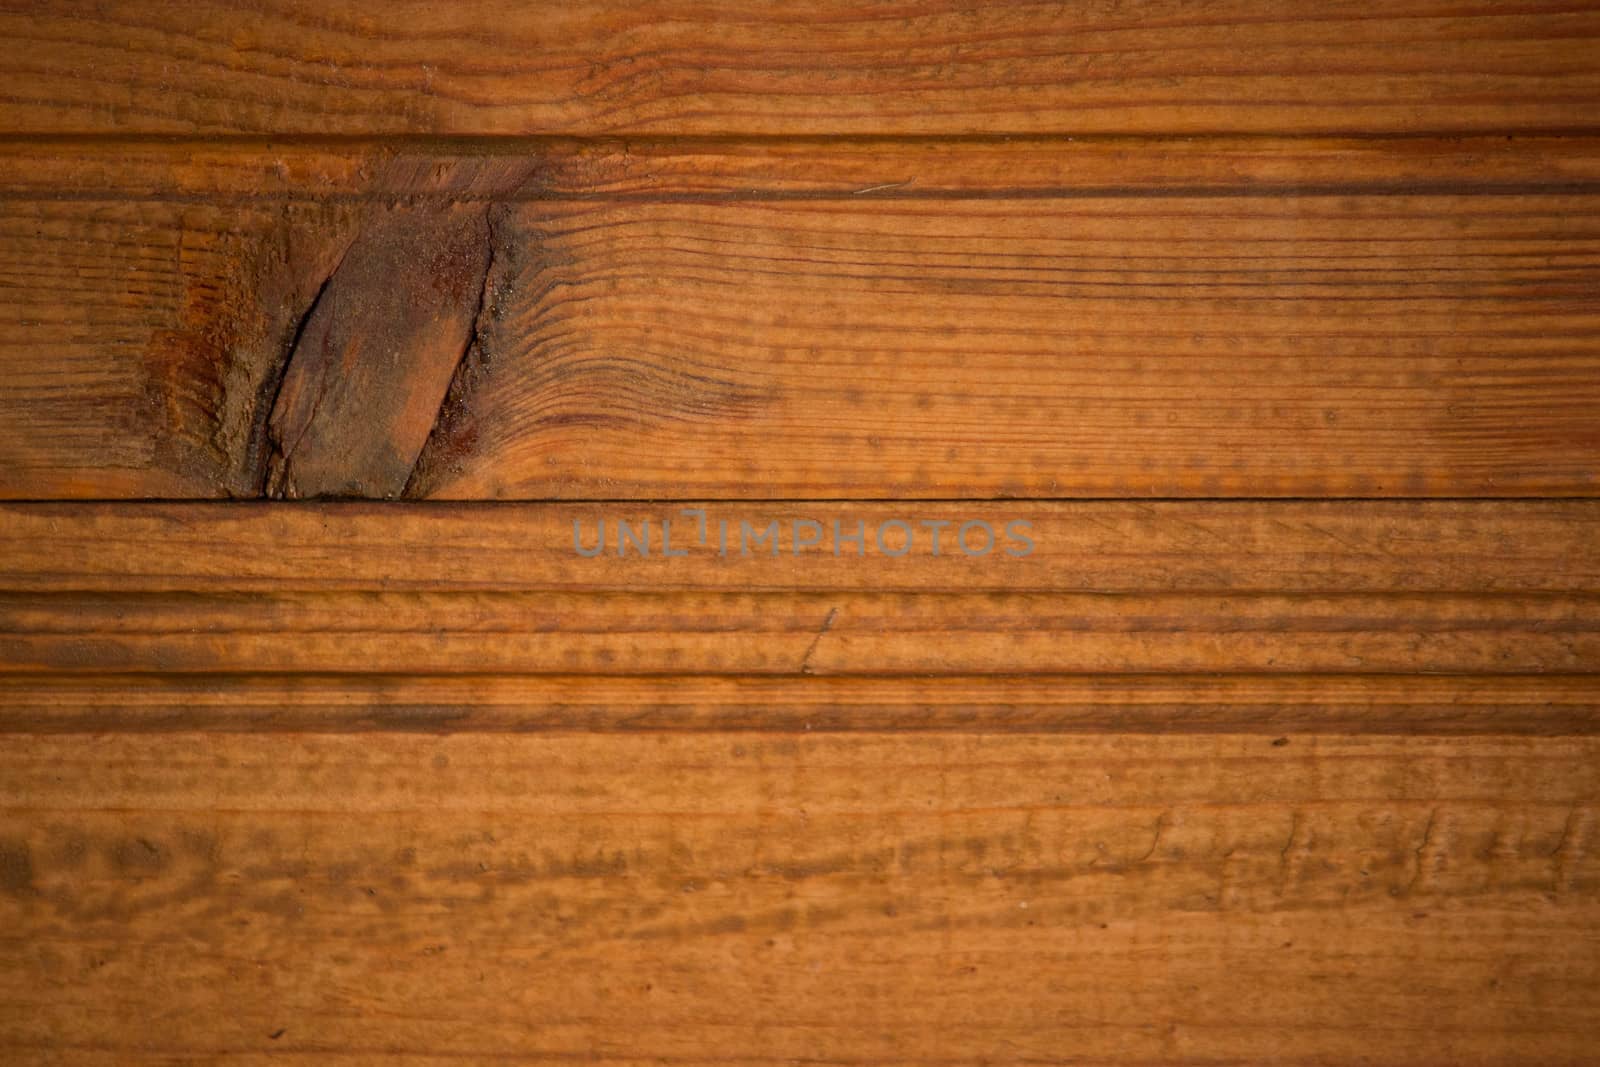 wooden texture by liwei12